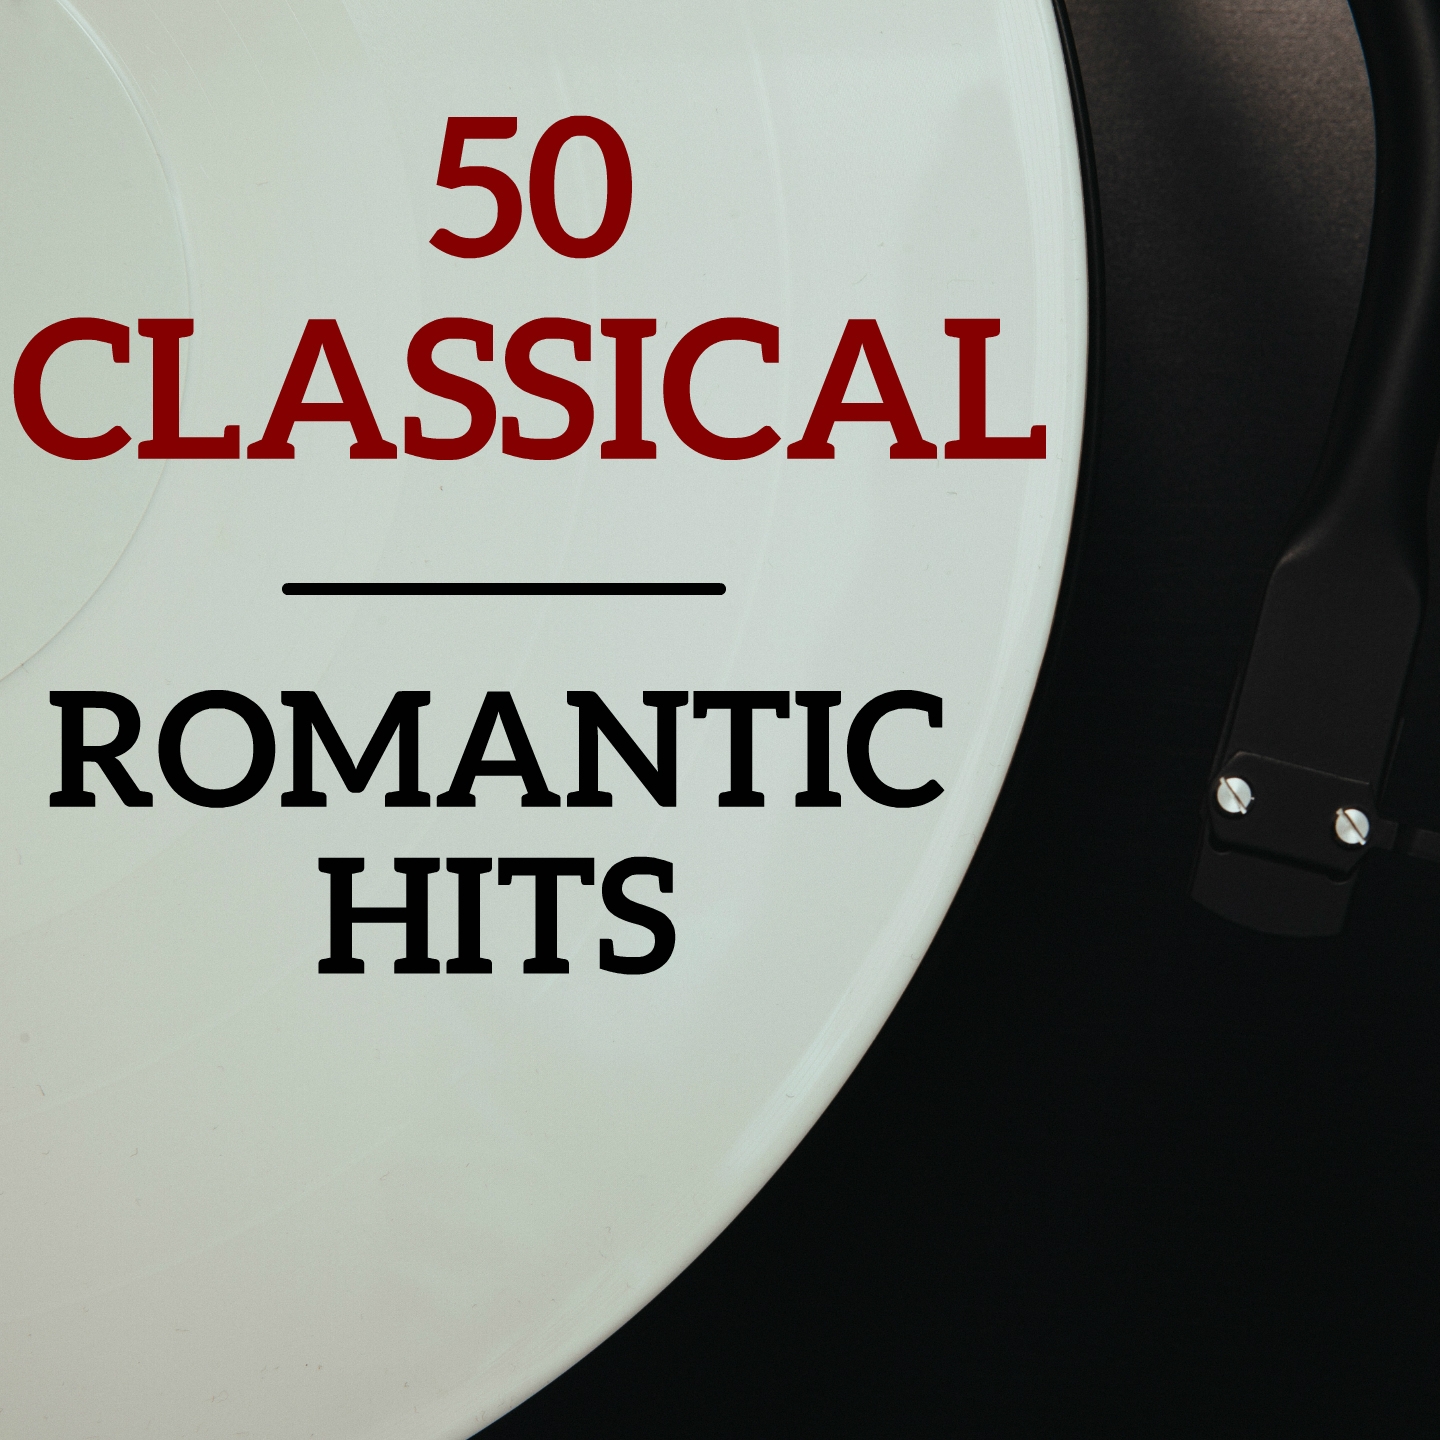 50 classical romantic hits